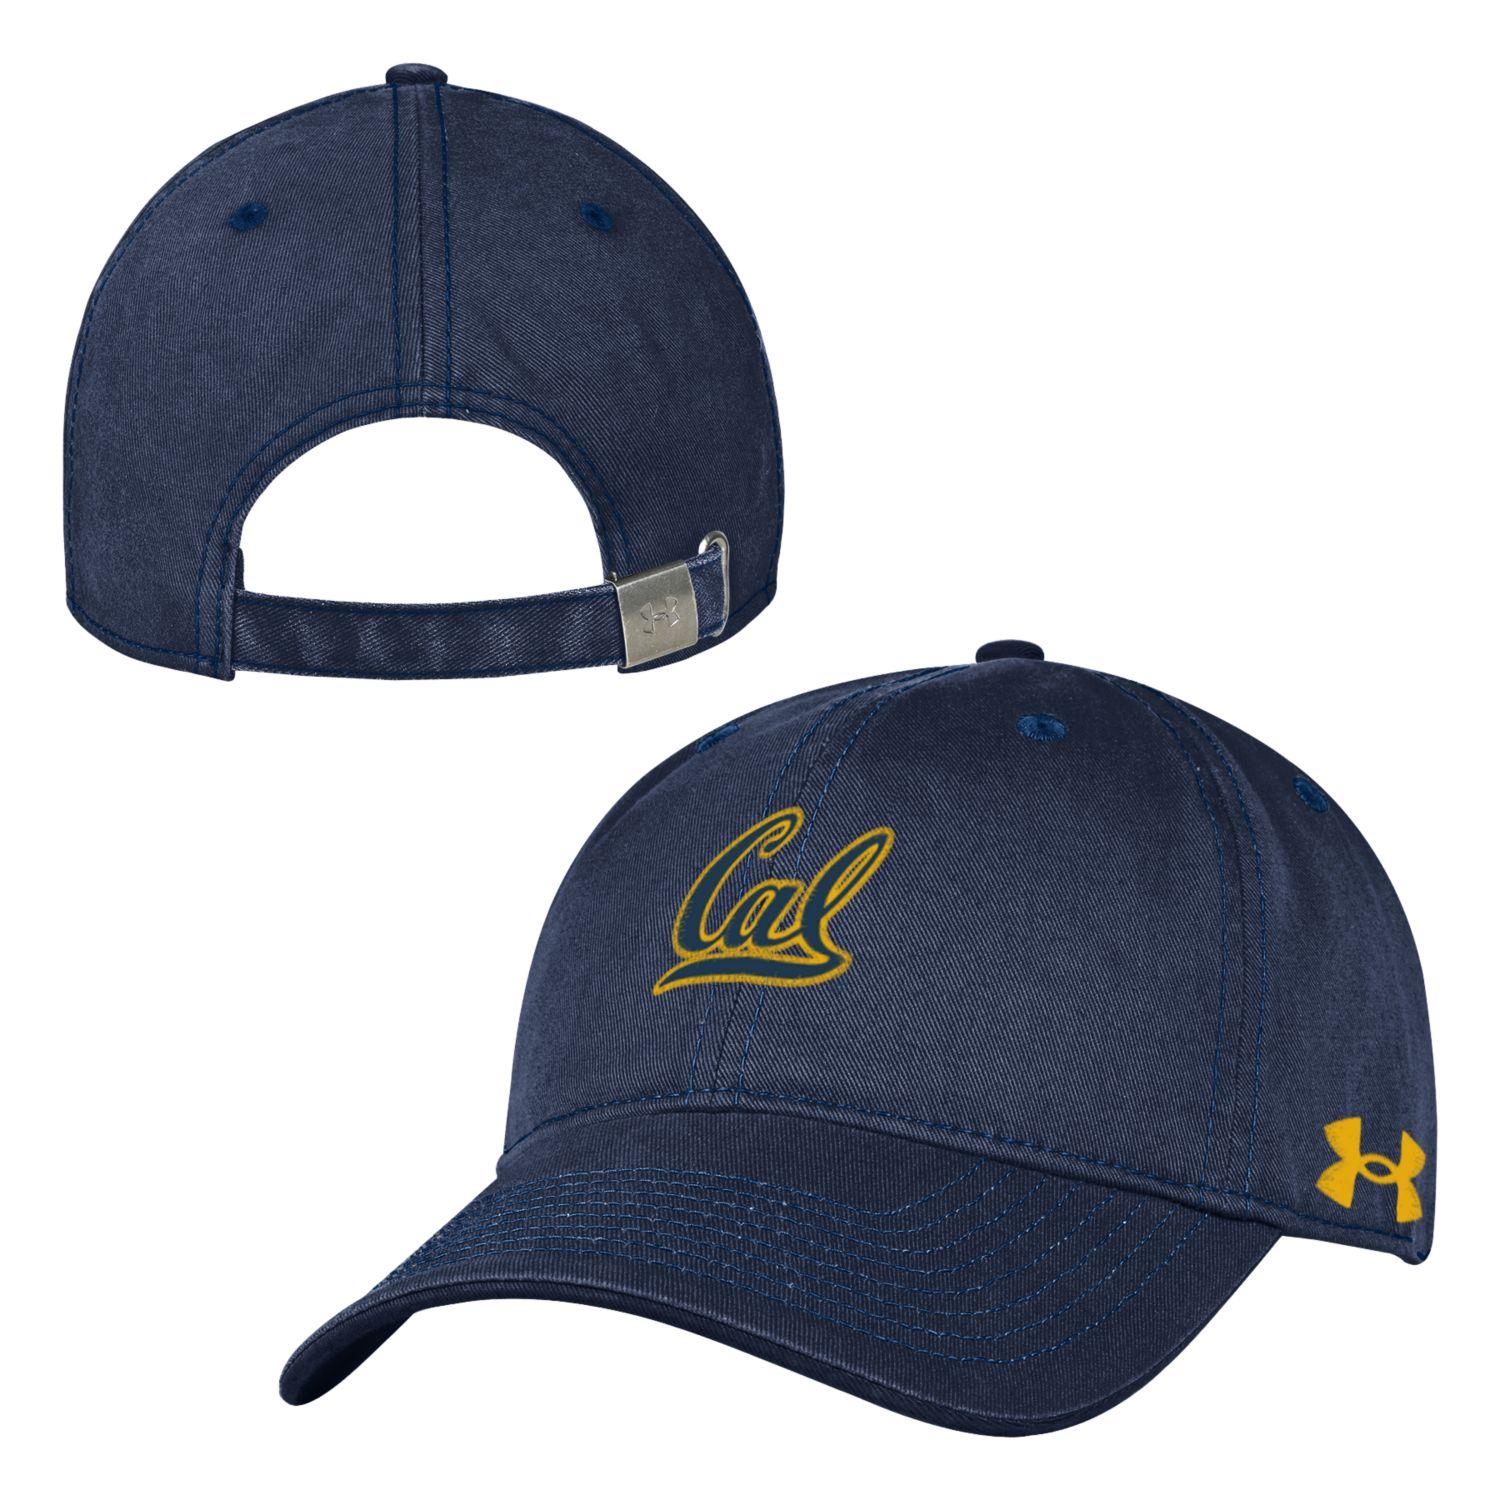 U.C. Berkeley 2 1/2" Cal embroidered performance cotton Under Armour adjustable hat-Navy-Shop College Wear